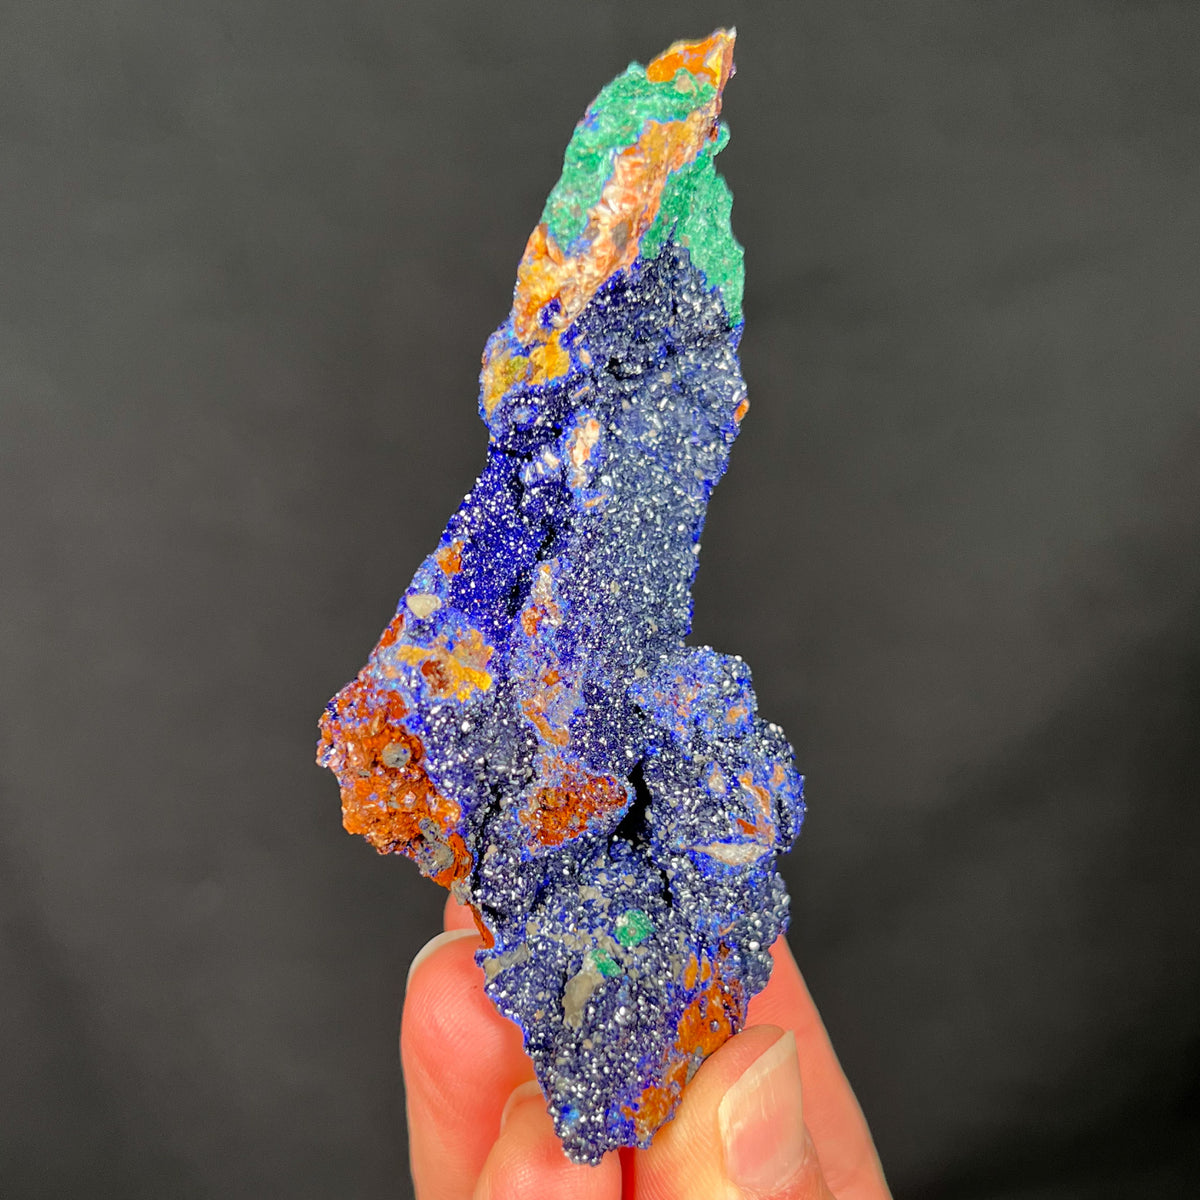 Drusy Azurite Crystals with Malachite